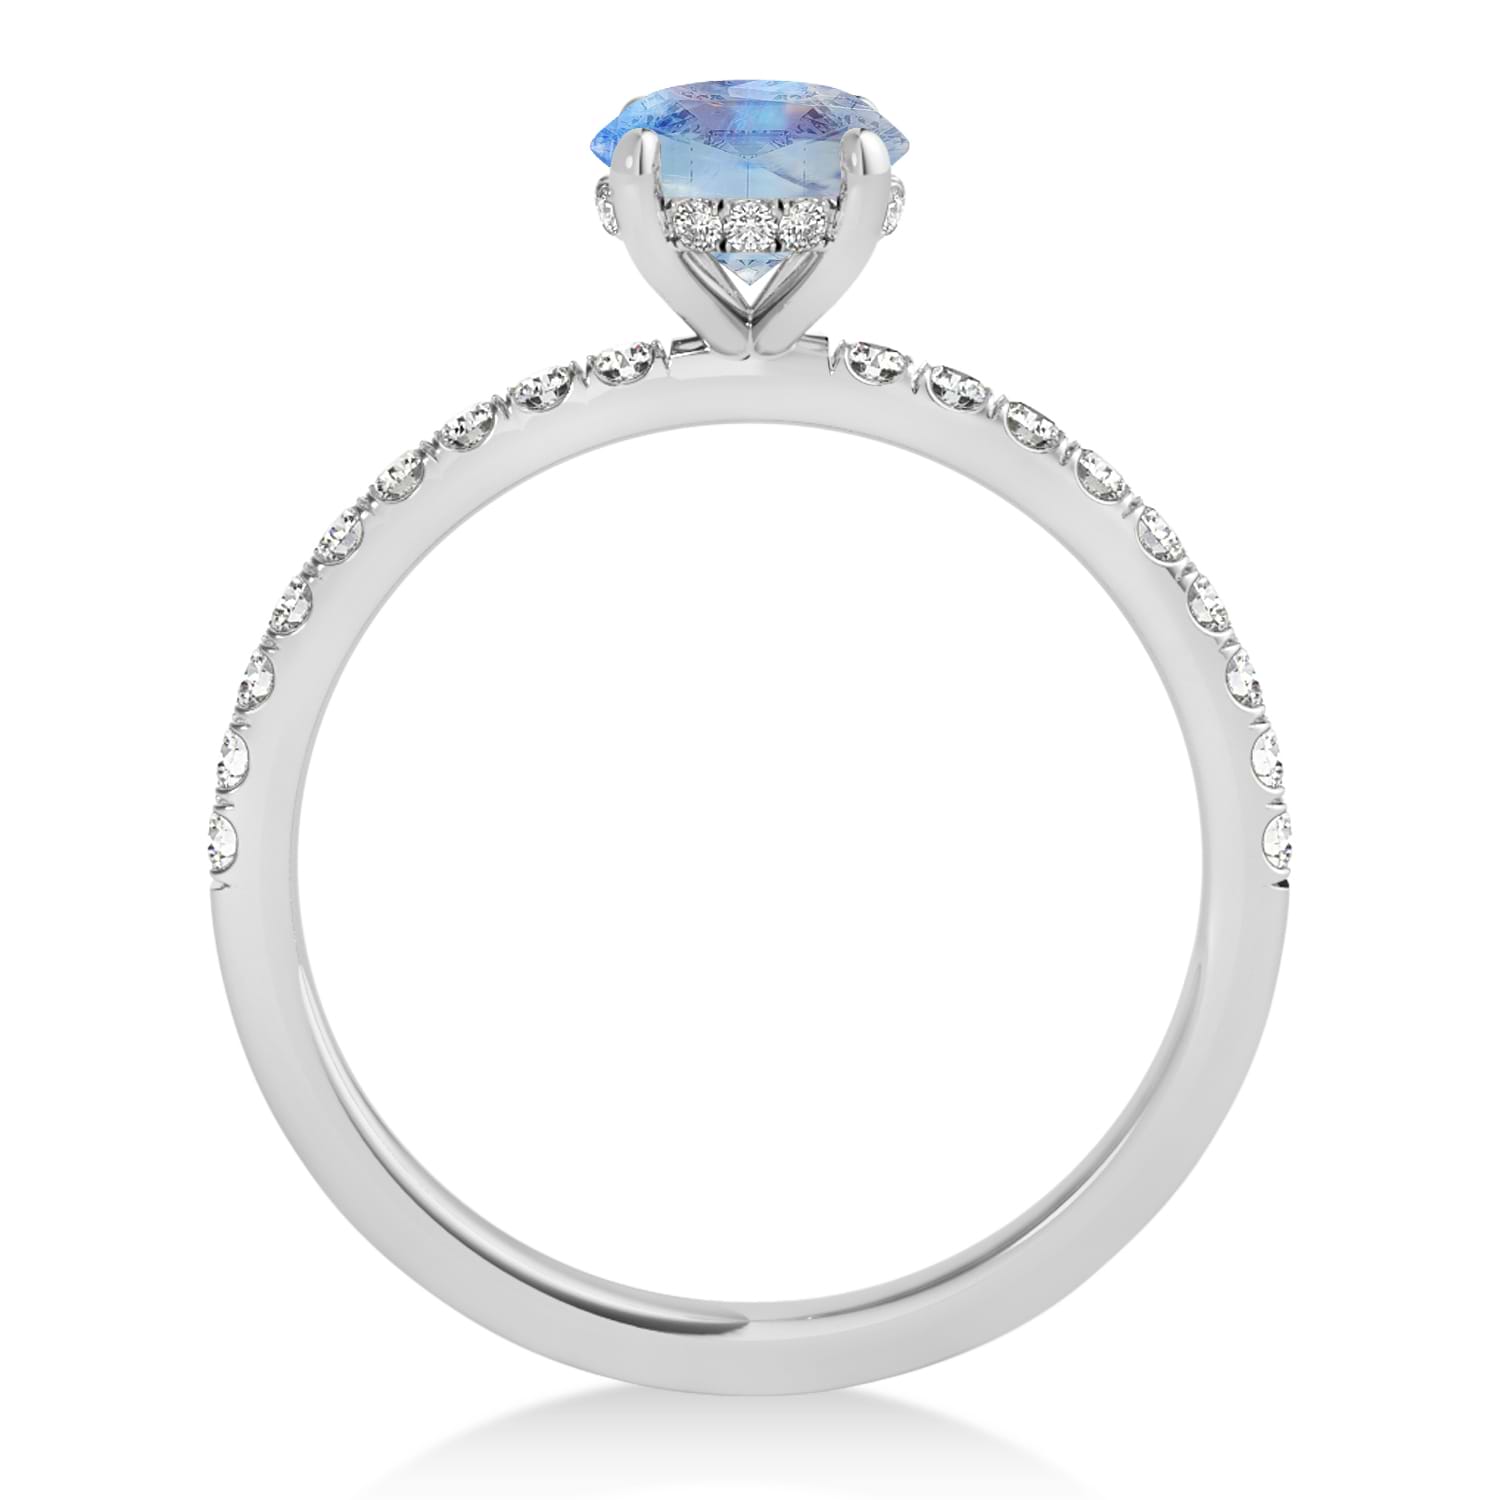 Round Moonstone & Diamond Single Row Hidden Halo Engagement Ring 14k White Gold (1.25ct)